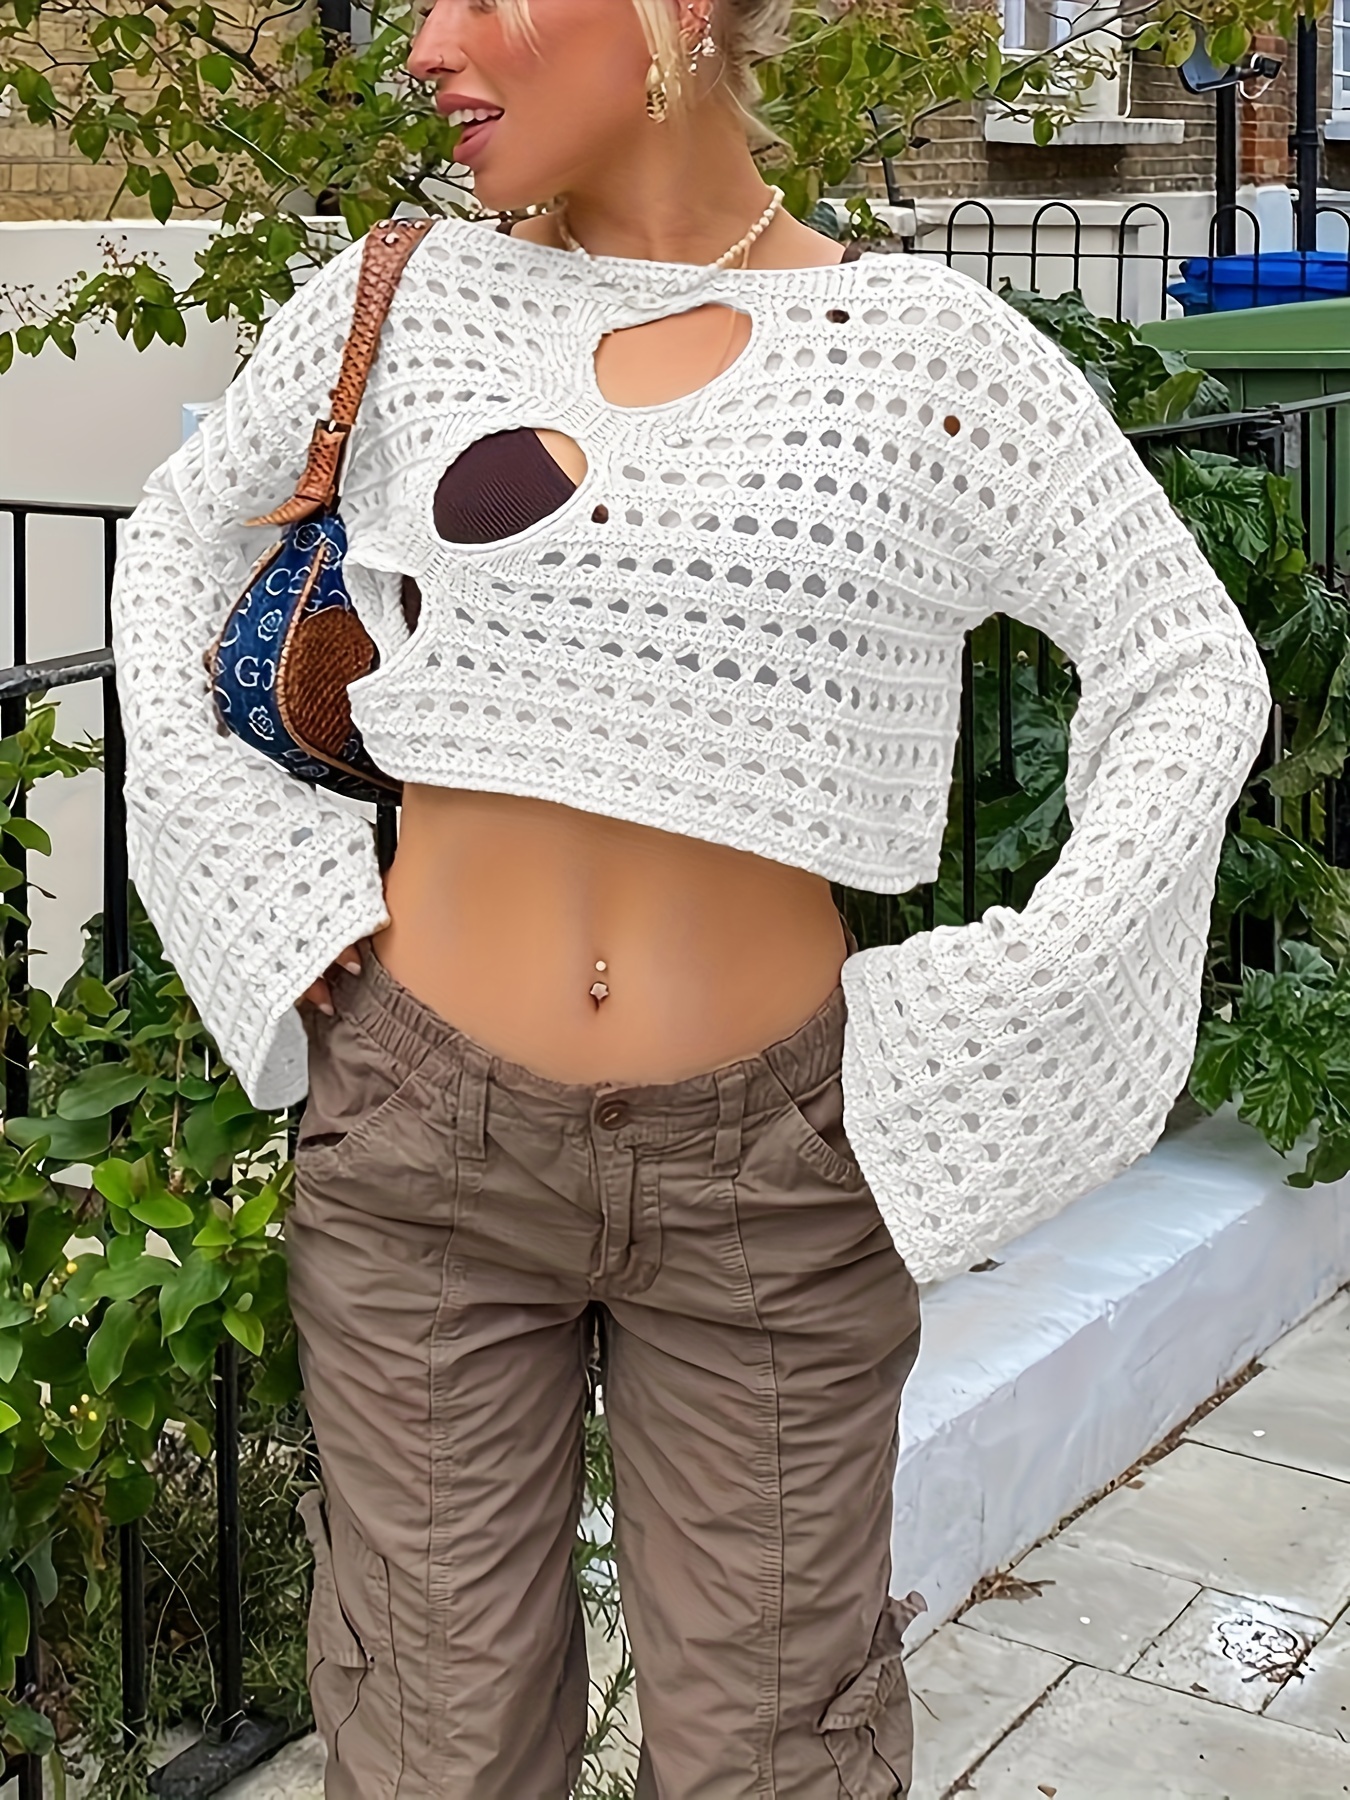 wybzd Women Summer Short Skinny Vest Tops Sleeveless Sheer Mesh Cover Up  See Through Crop Top Grunge Streetwear Silver L